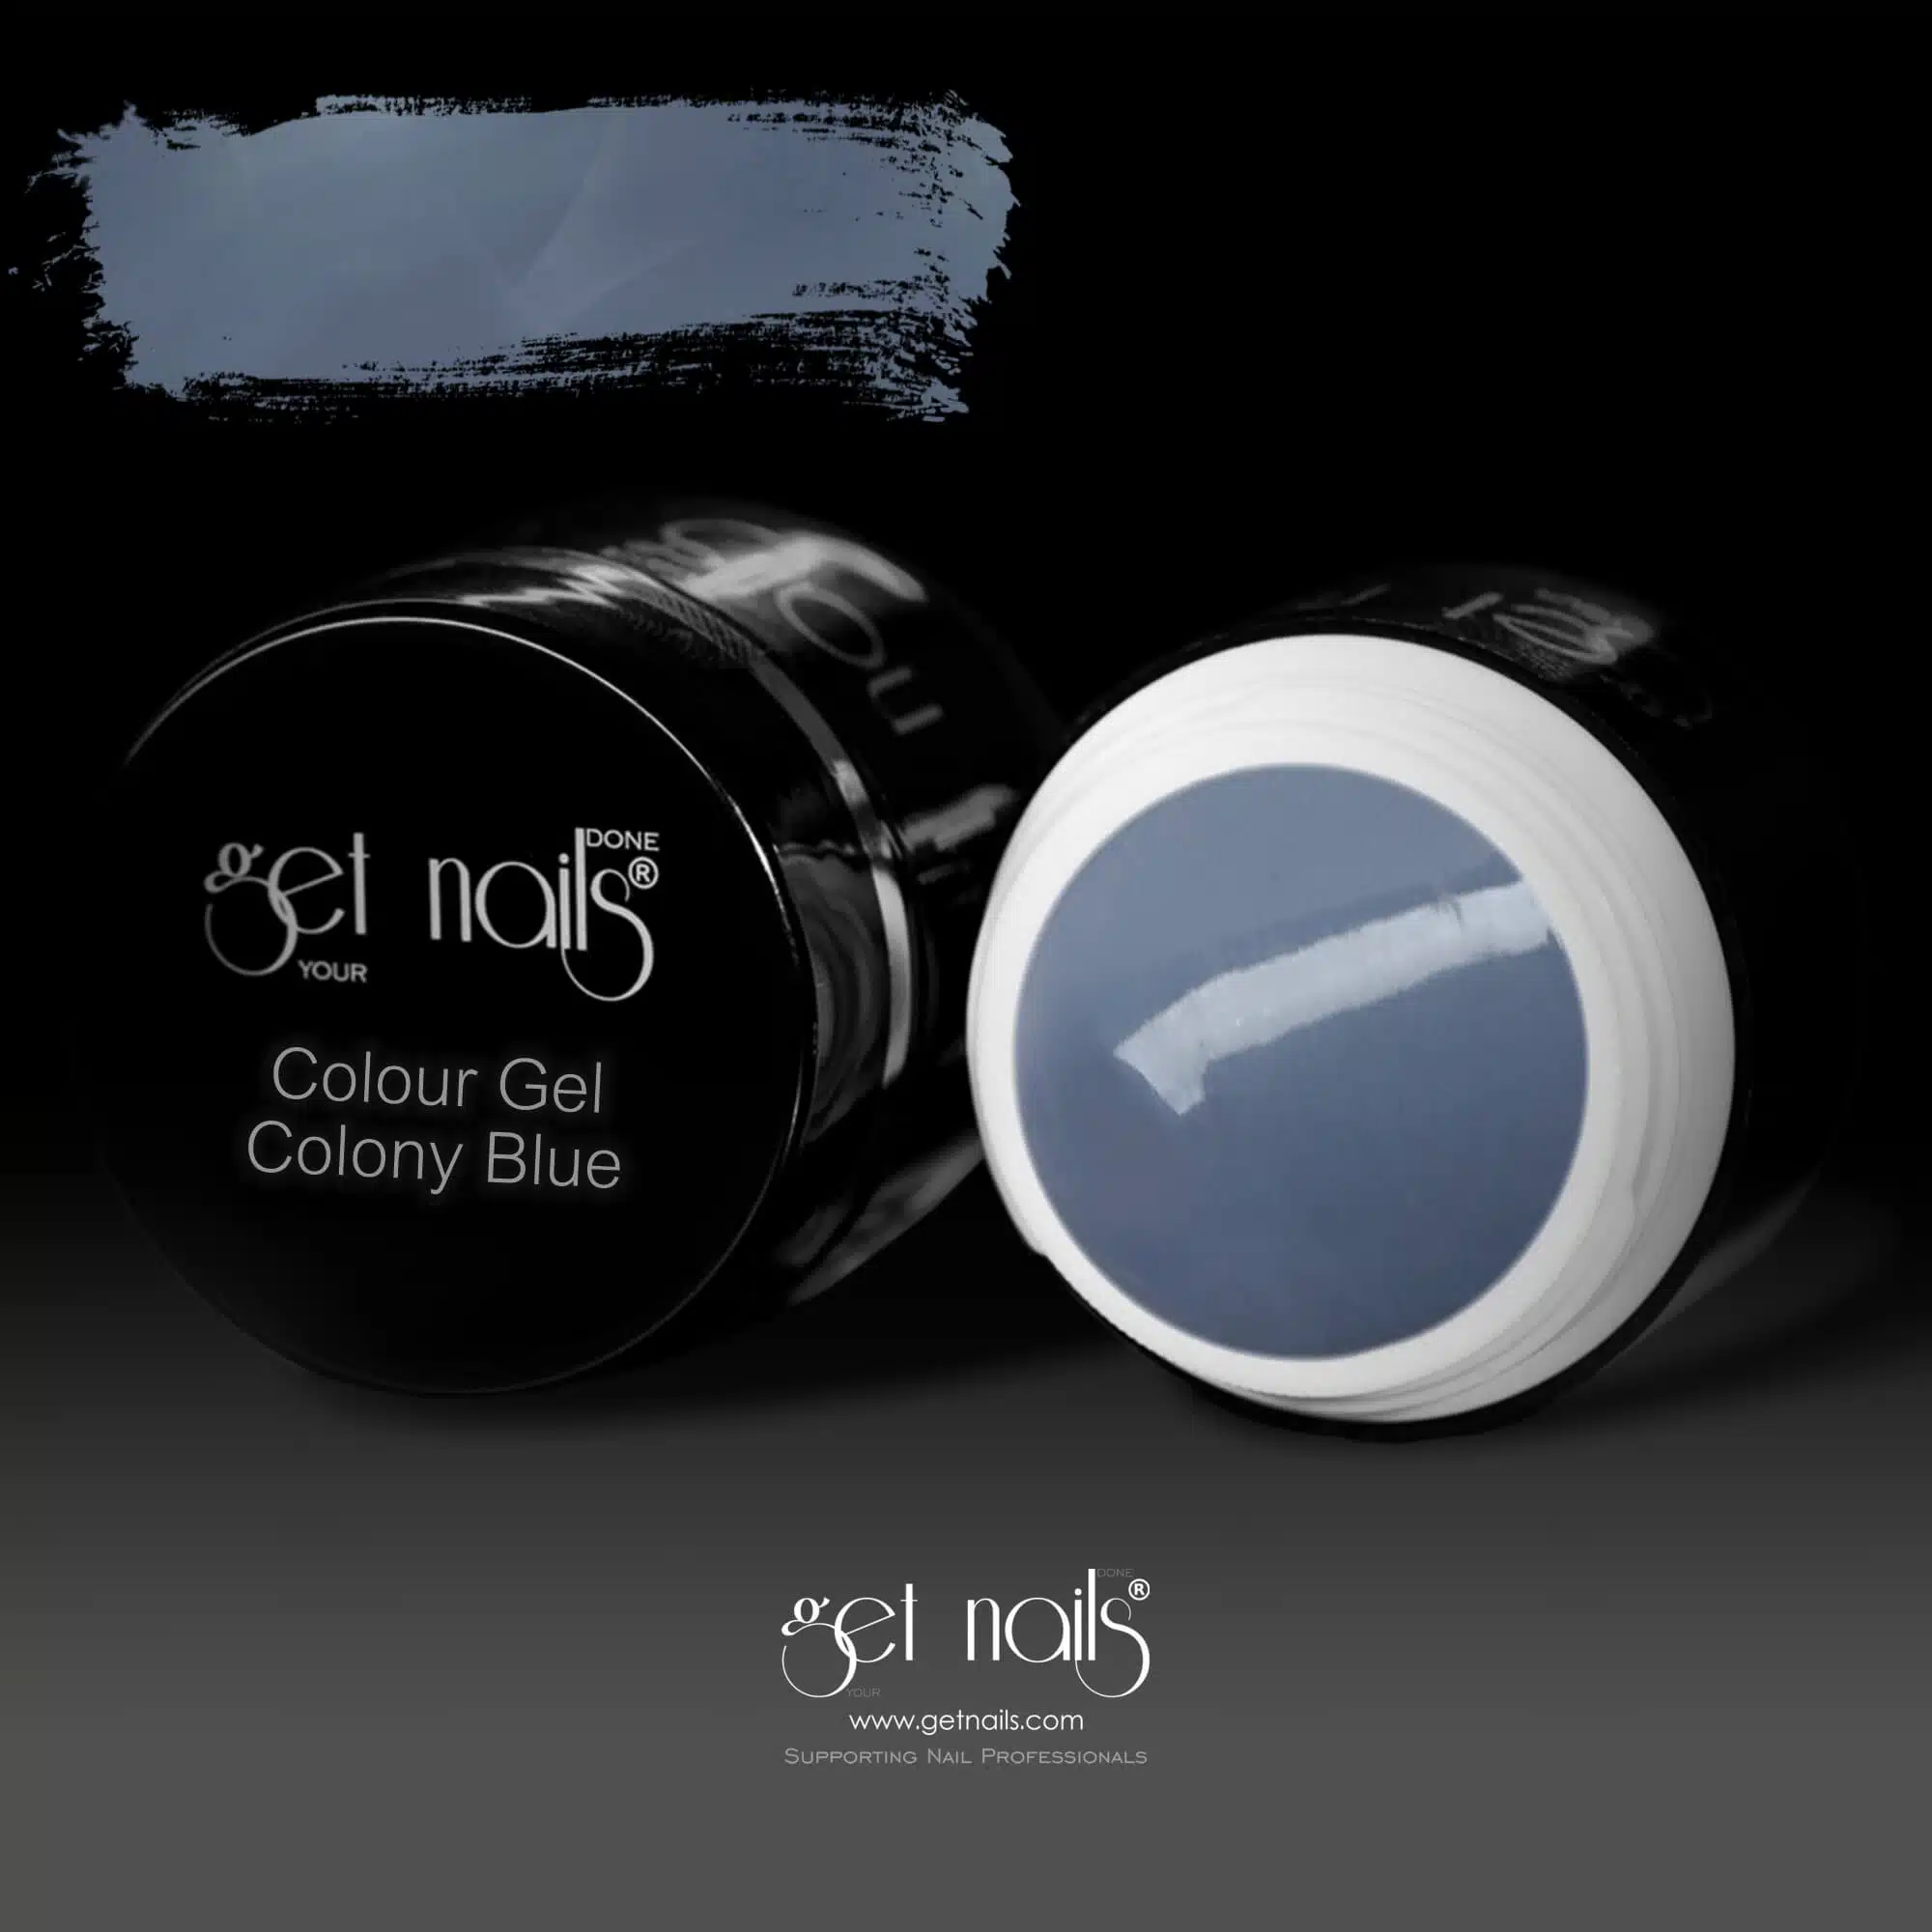 Get Nails Austria - Colour Gel Colony Blue 5g